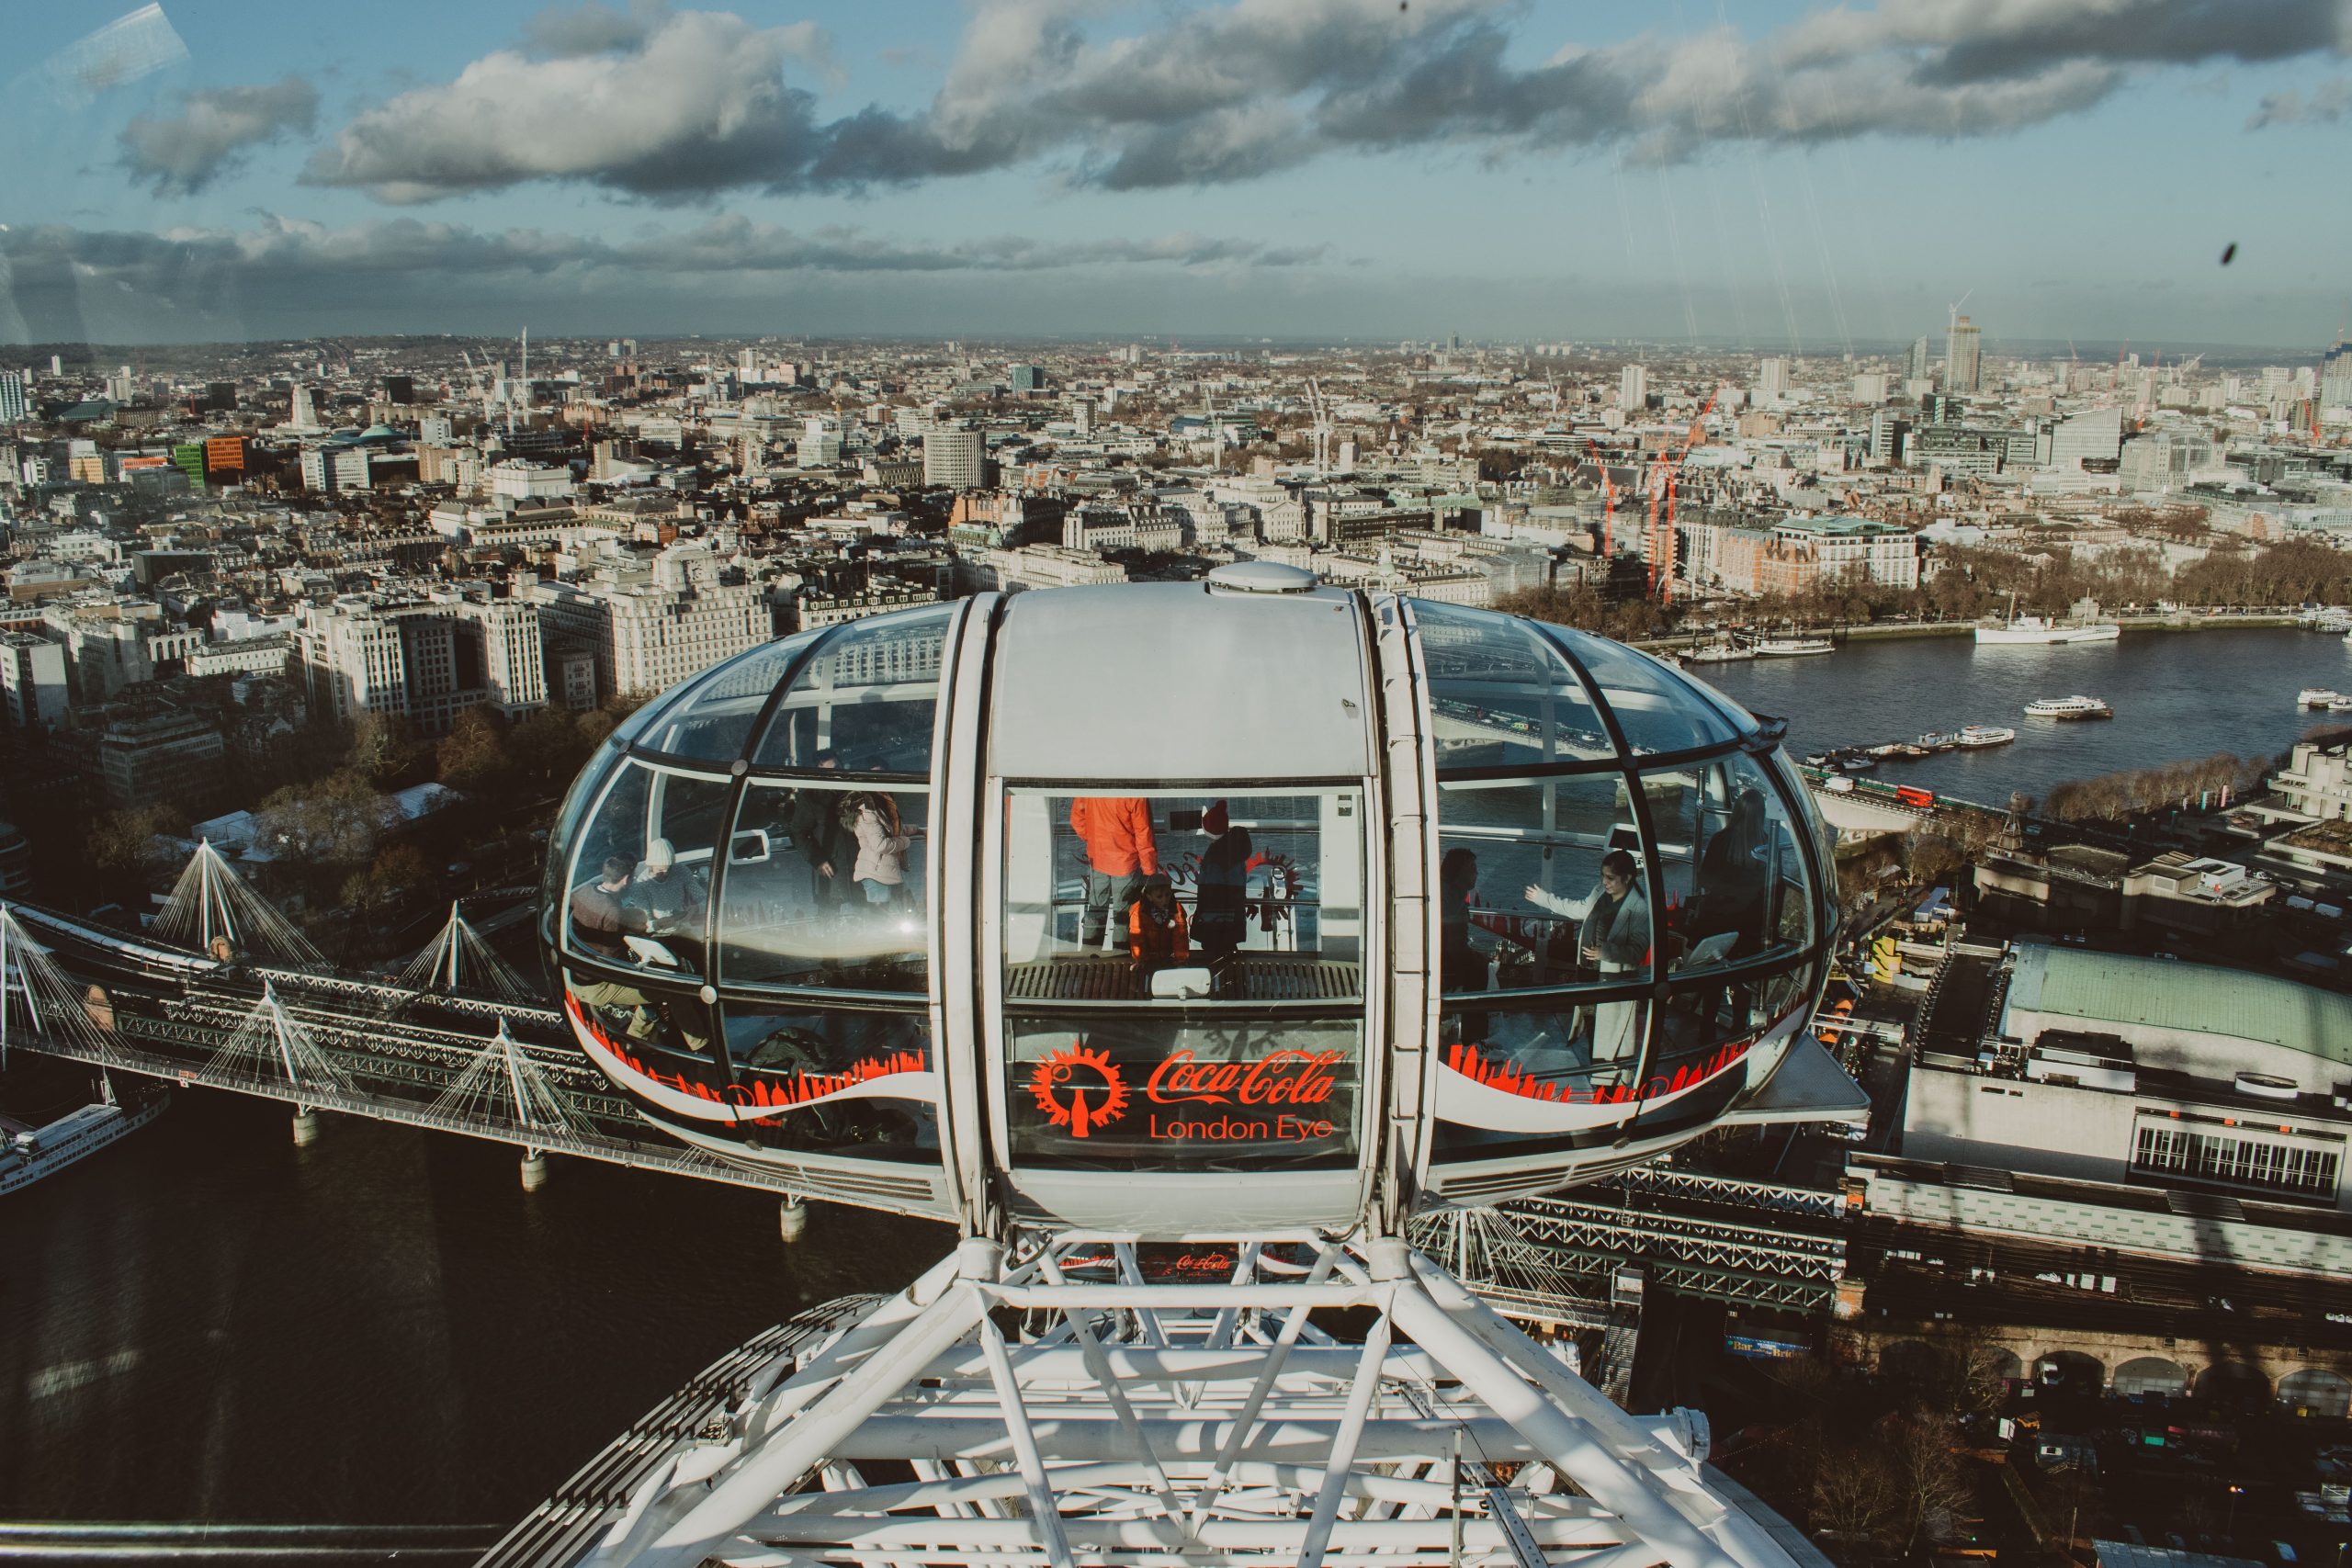 Inside one of the Pods of the London Eye, Ferris Wheel, London